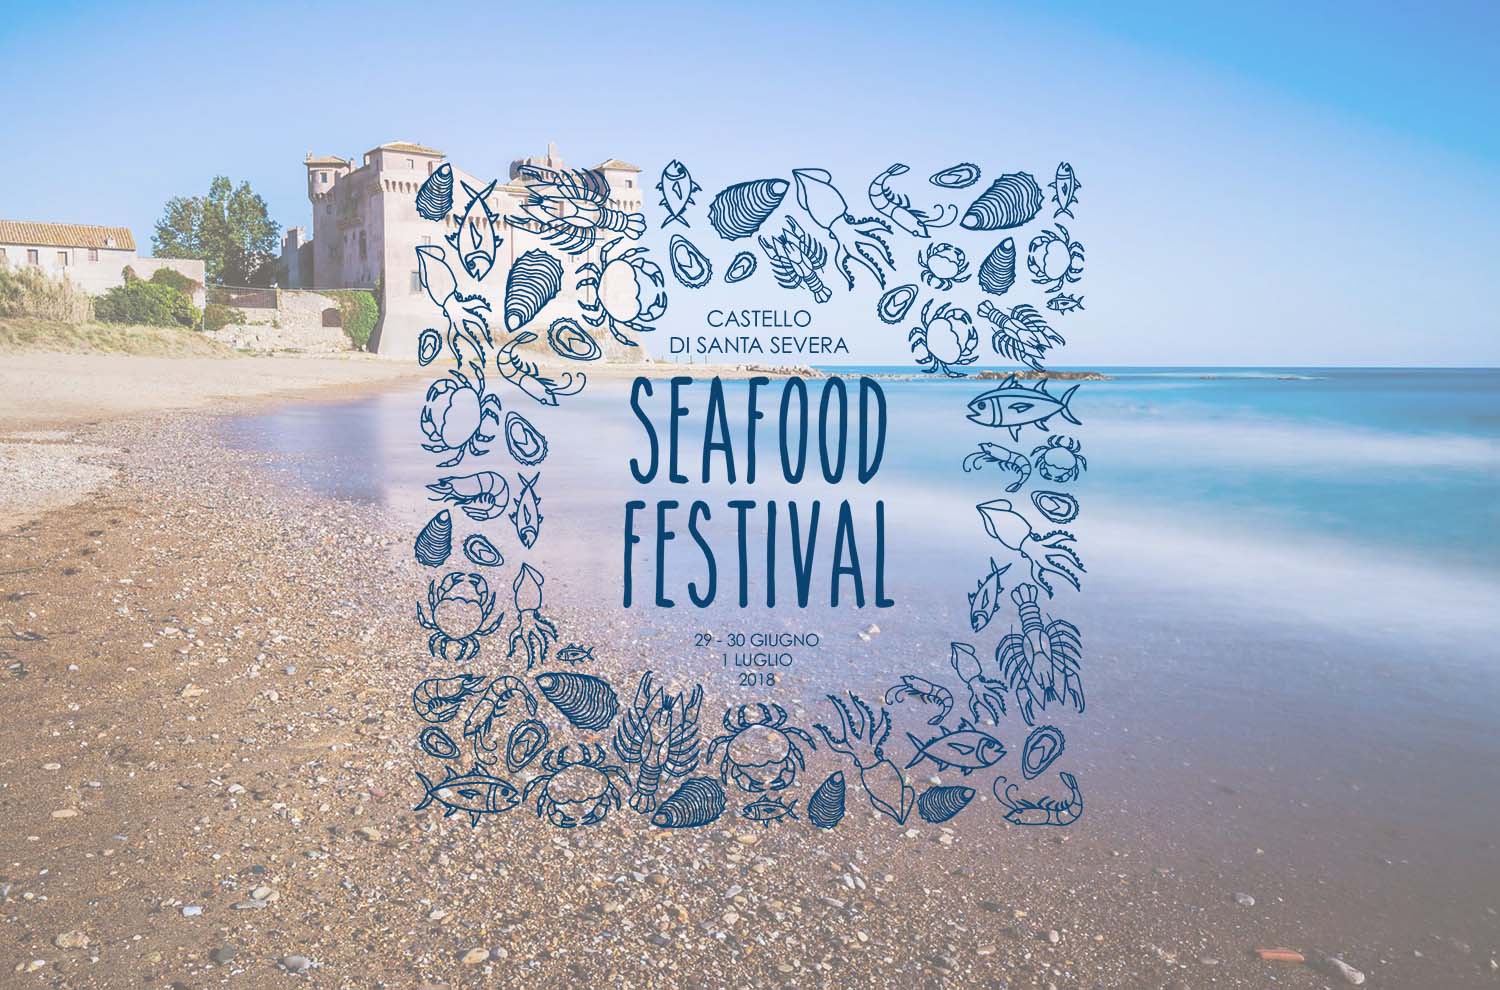 Seafood festival